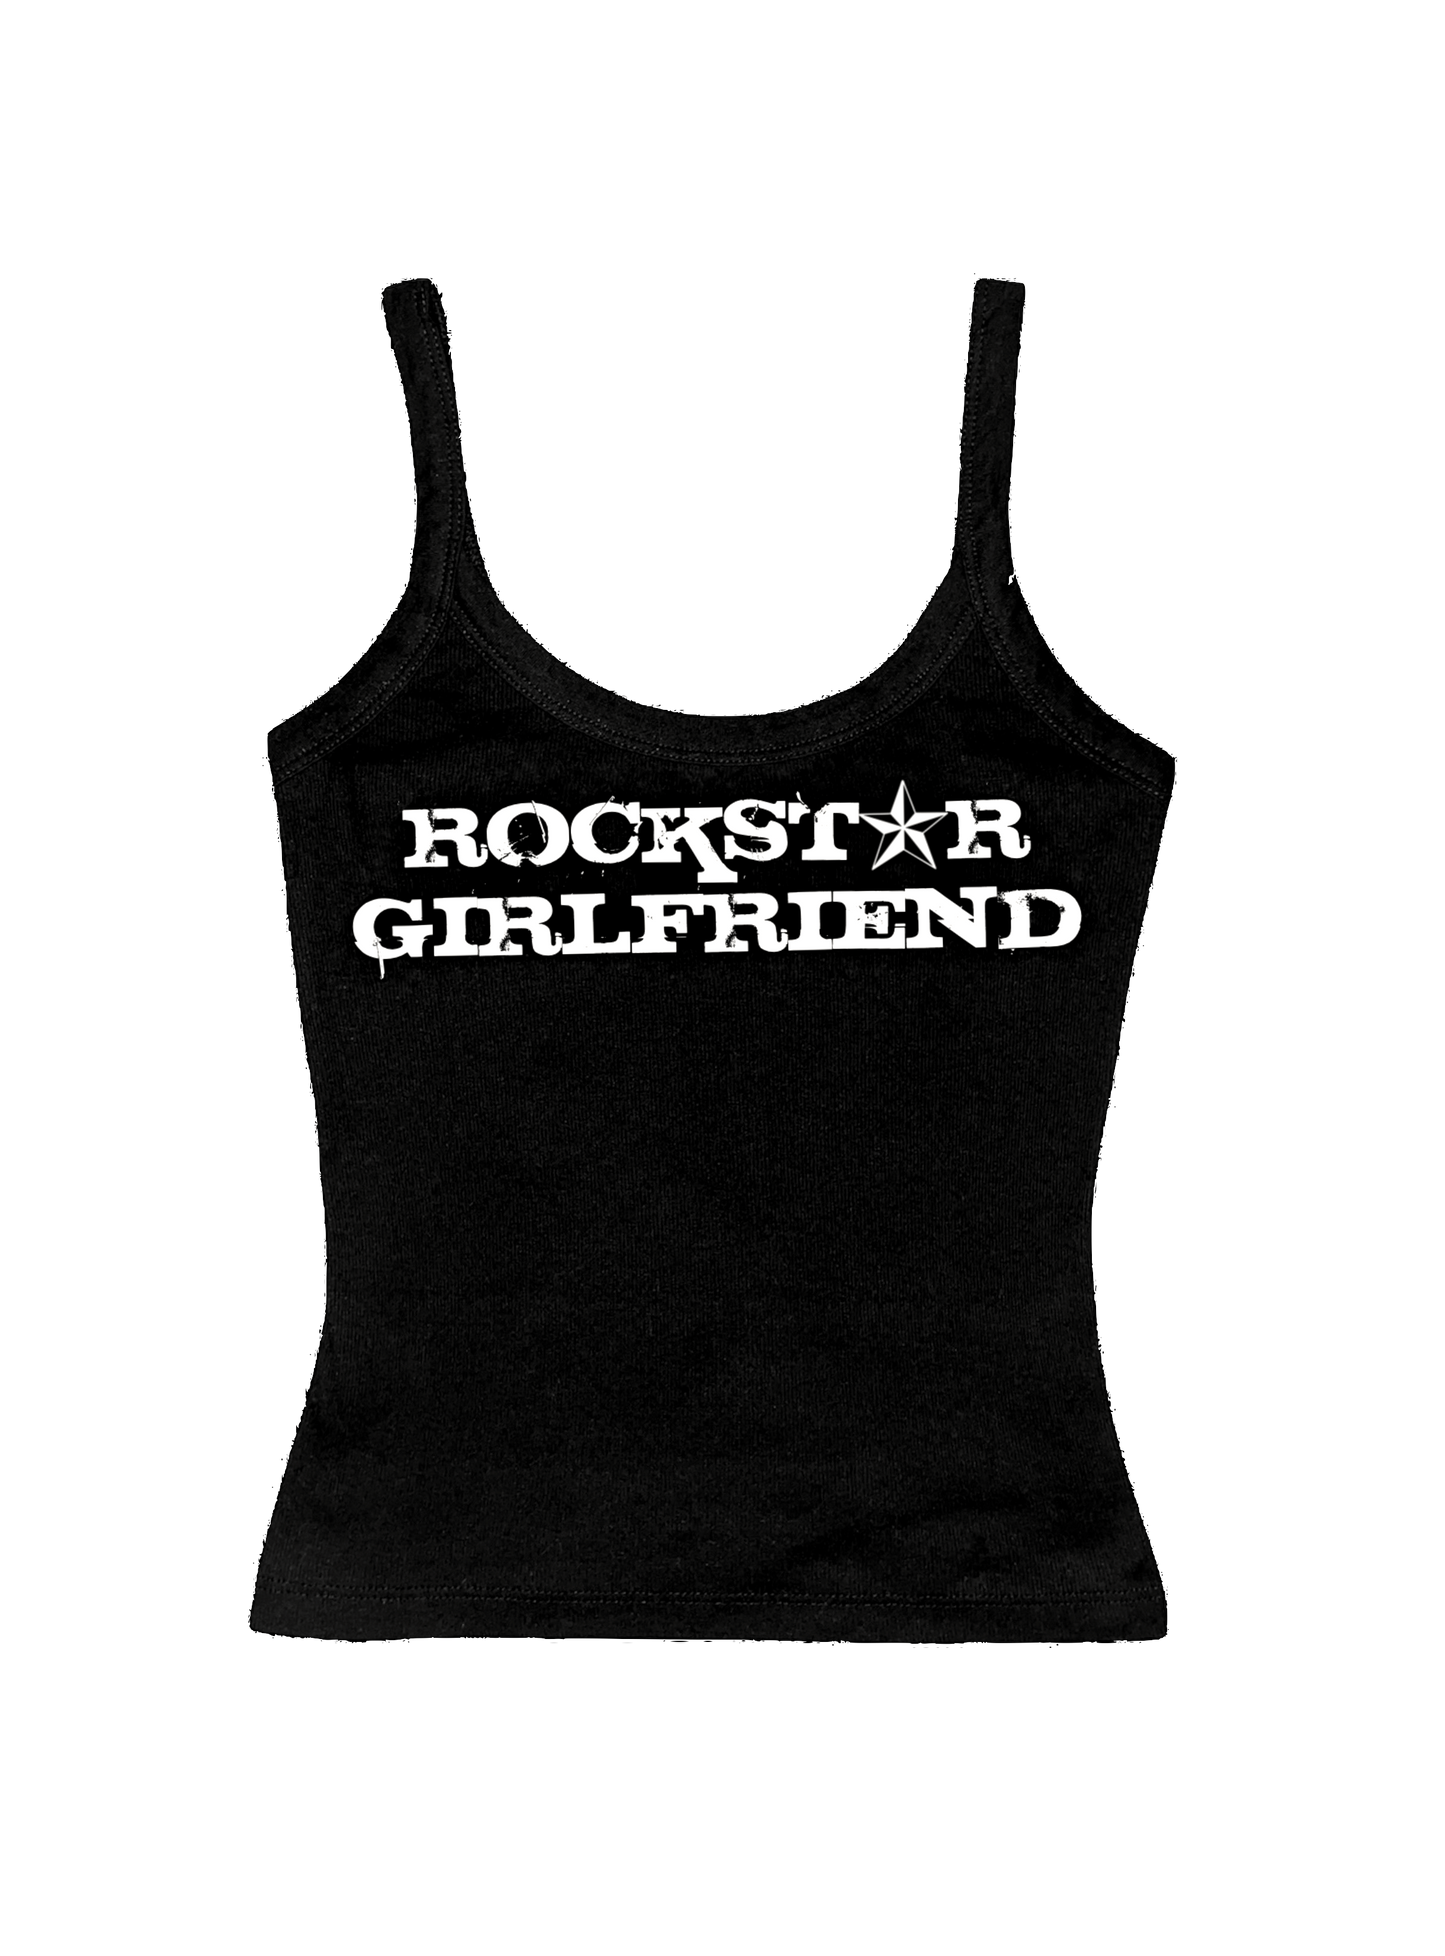 Rockstar Girlfriend